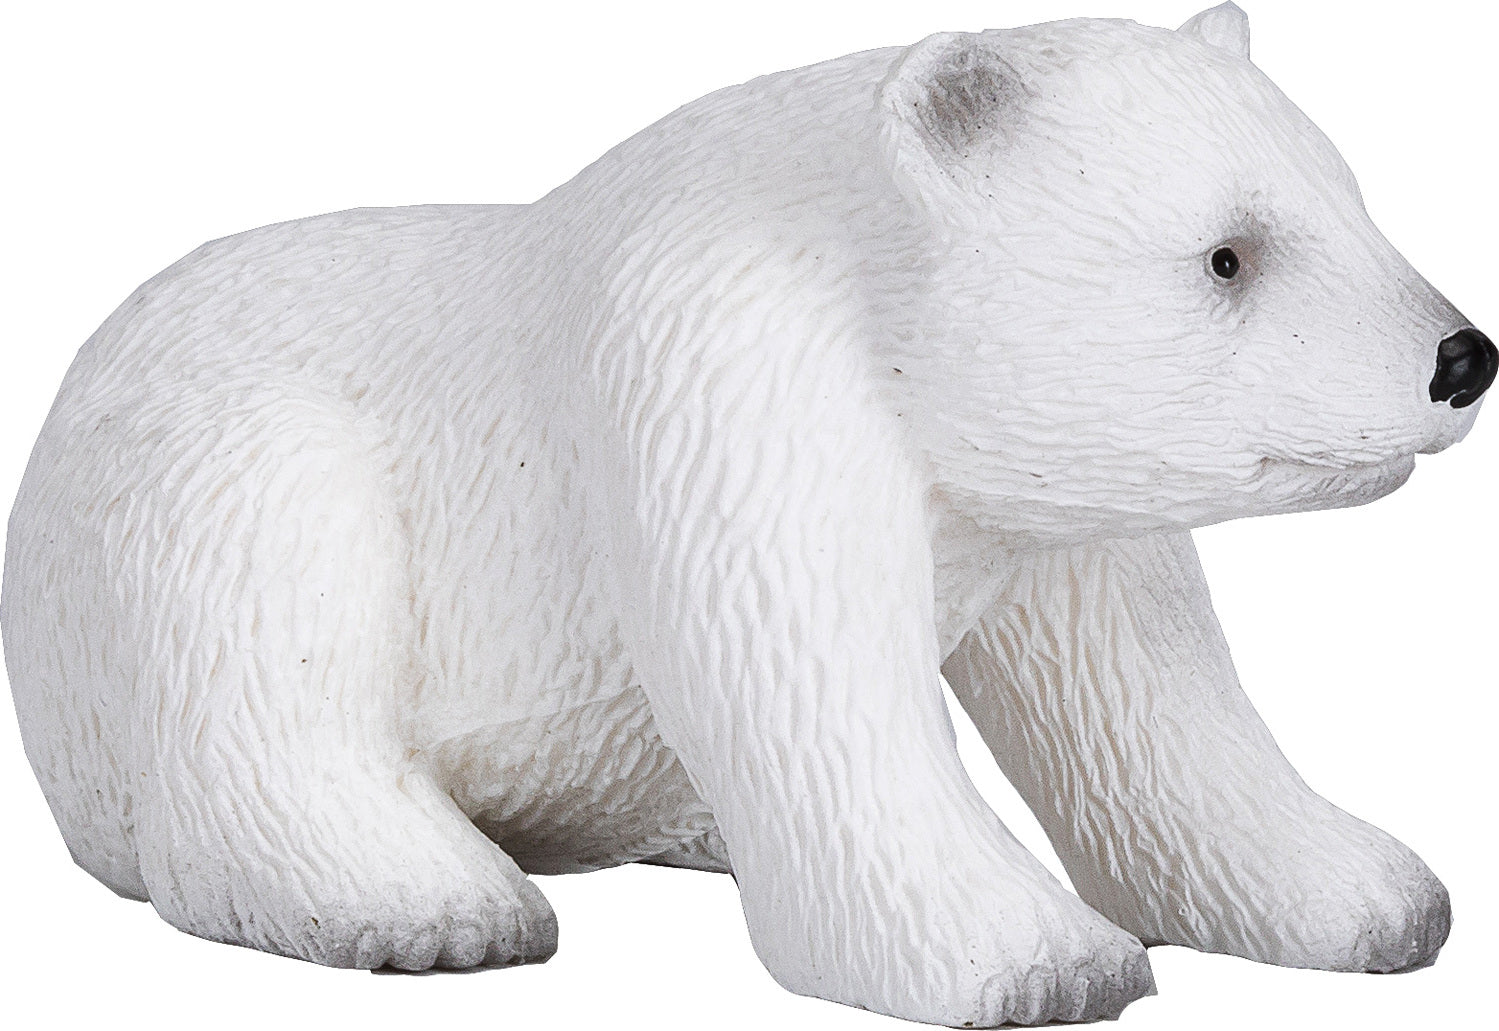 Polar bear cub Sitting